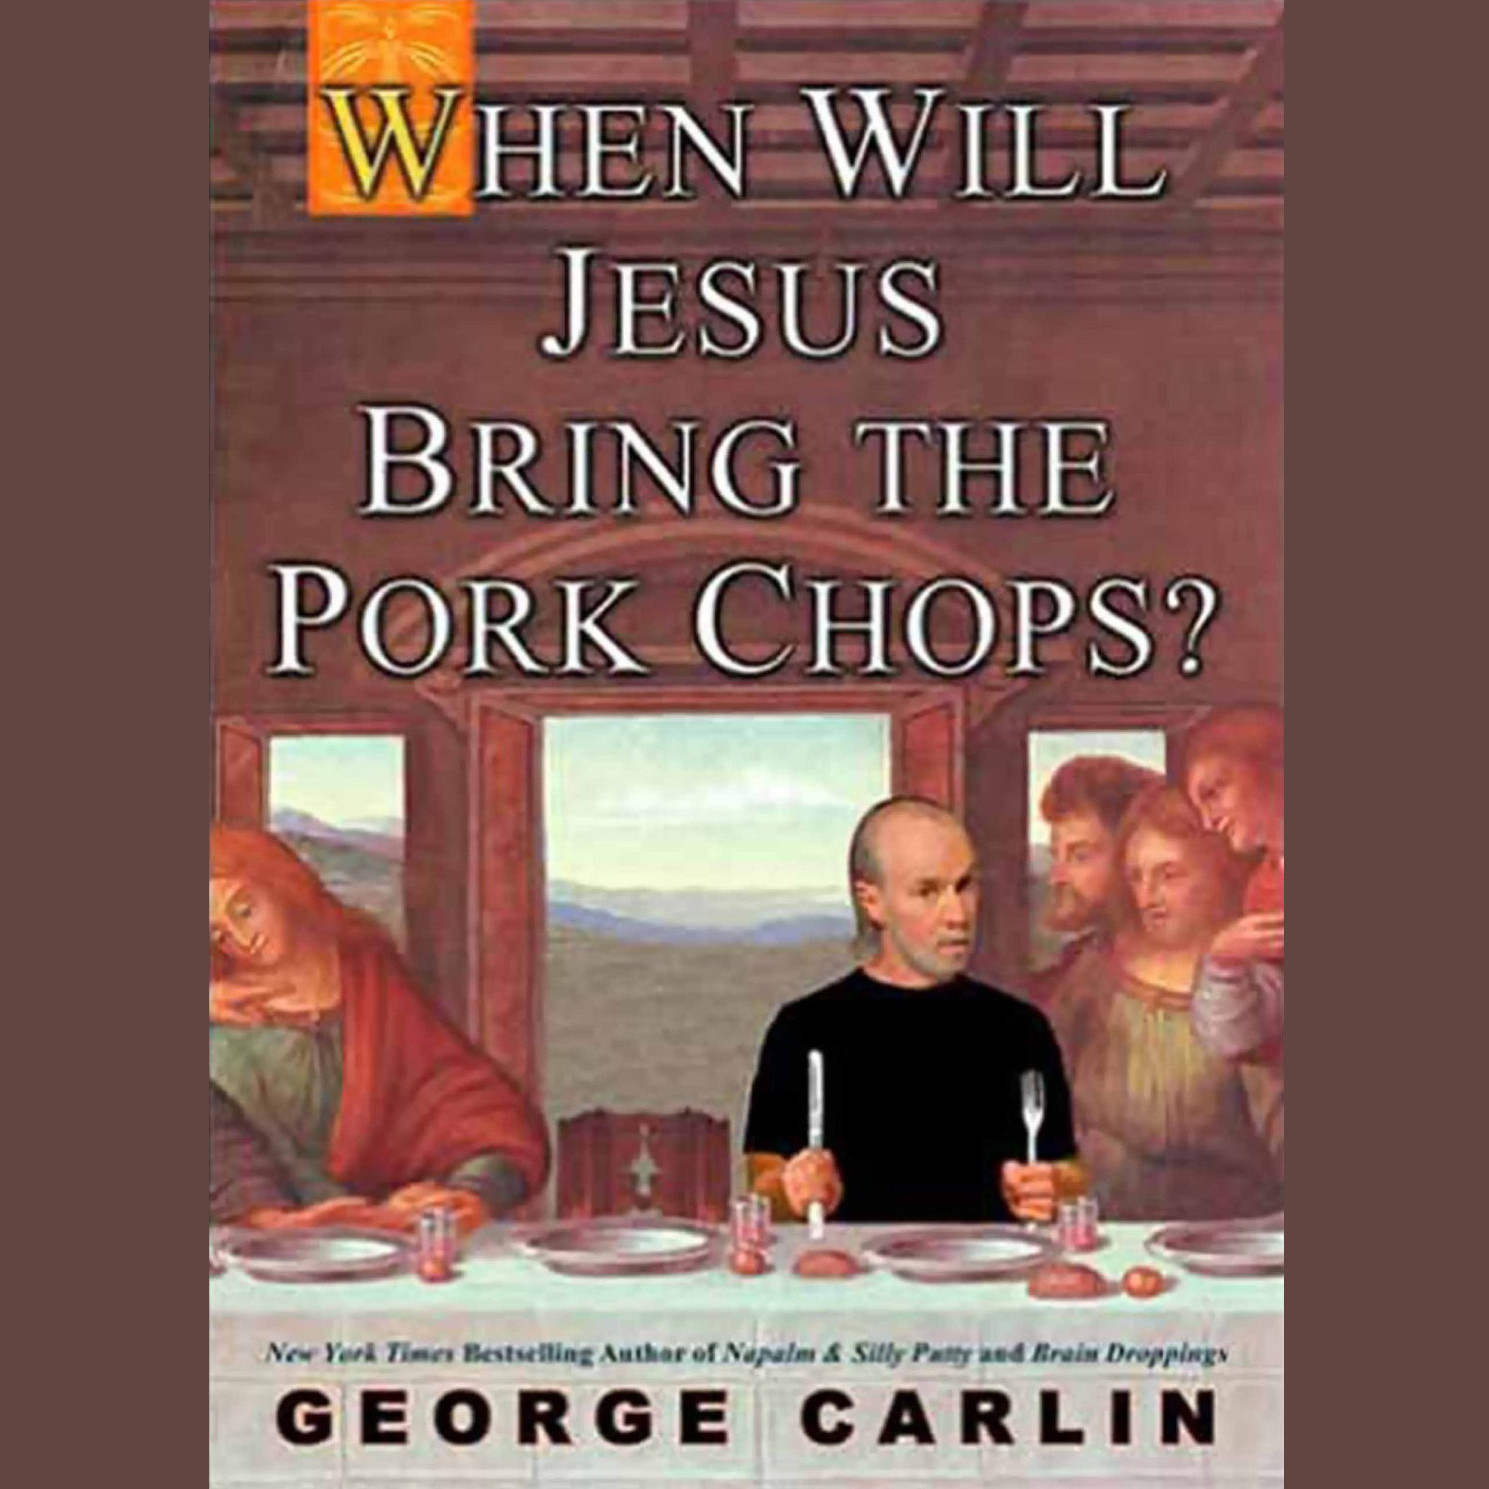 When Will Jesus Bring The Pork Chops
 When Will Jesus Bring the Pork Chops Audiobook